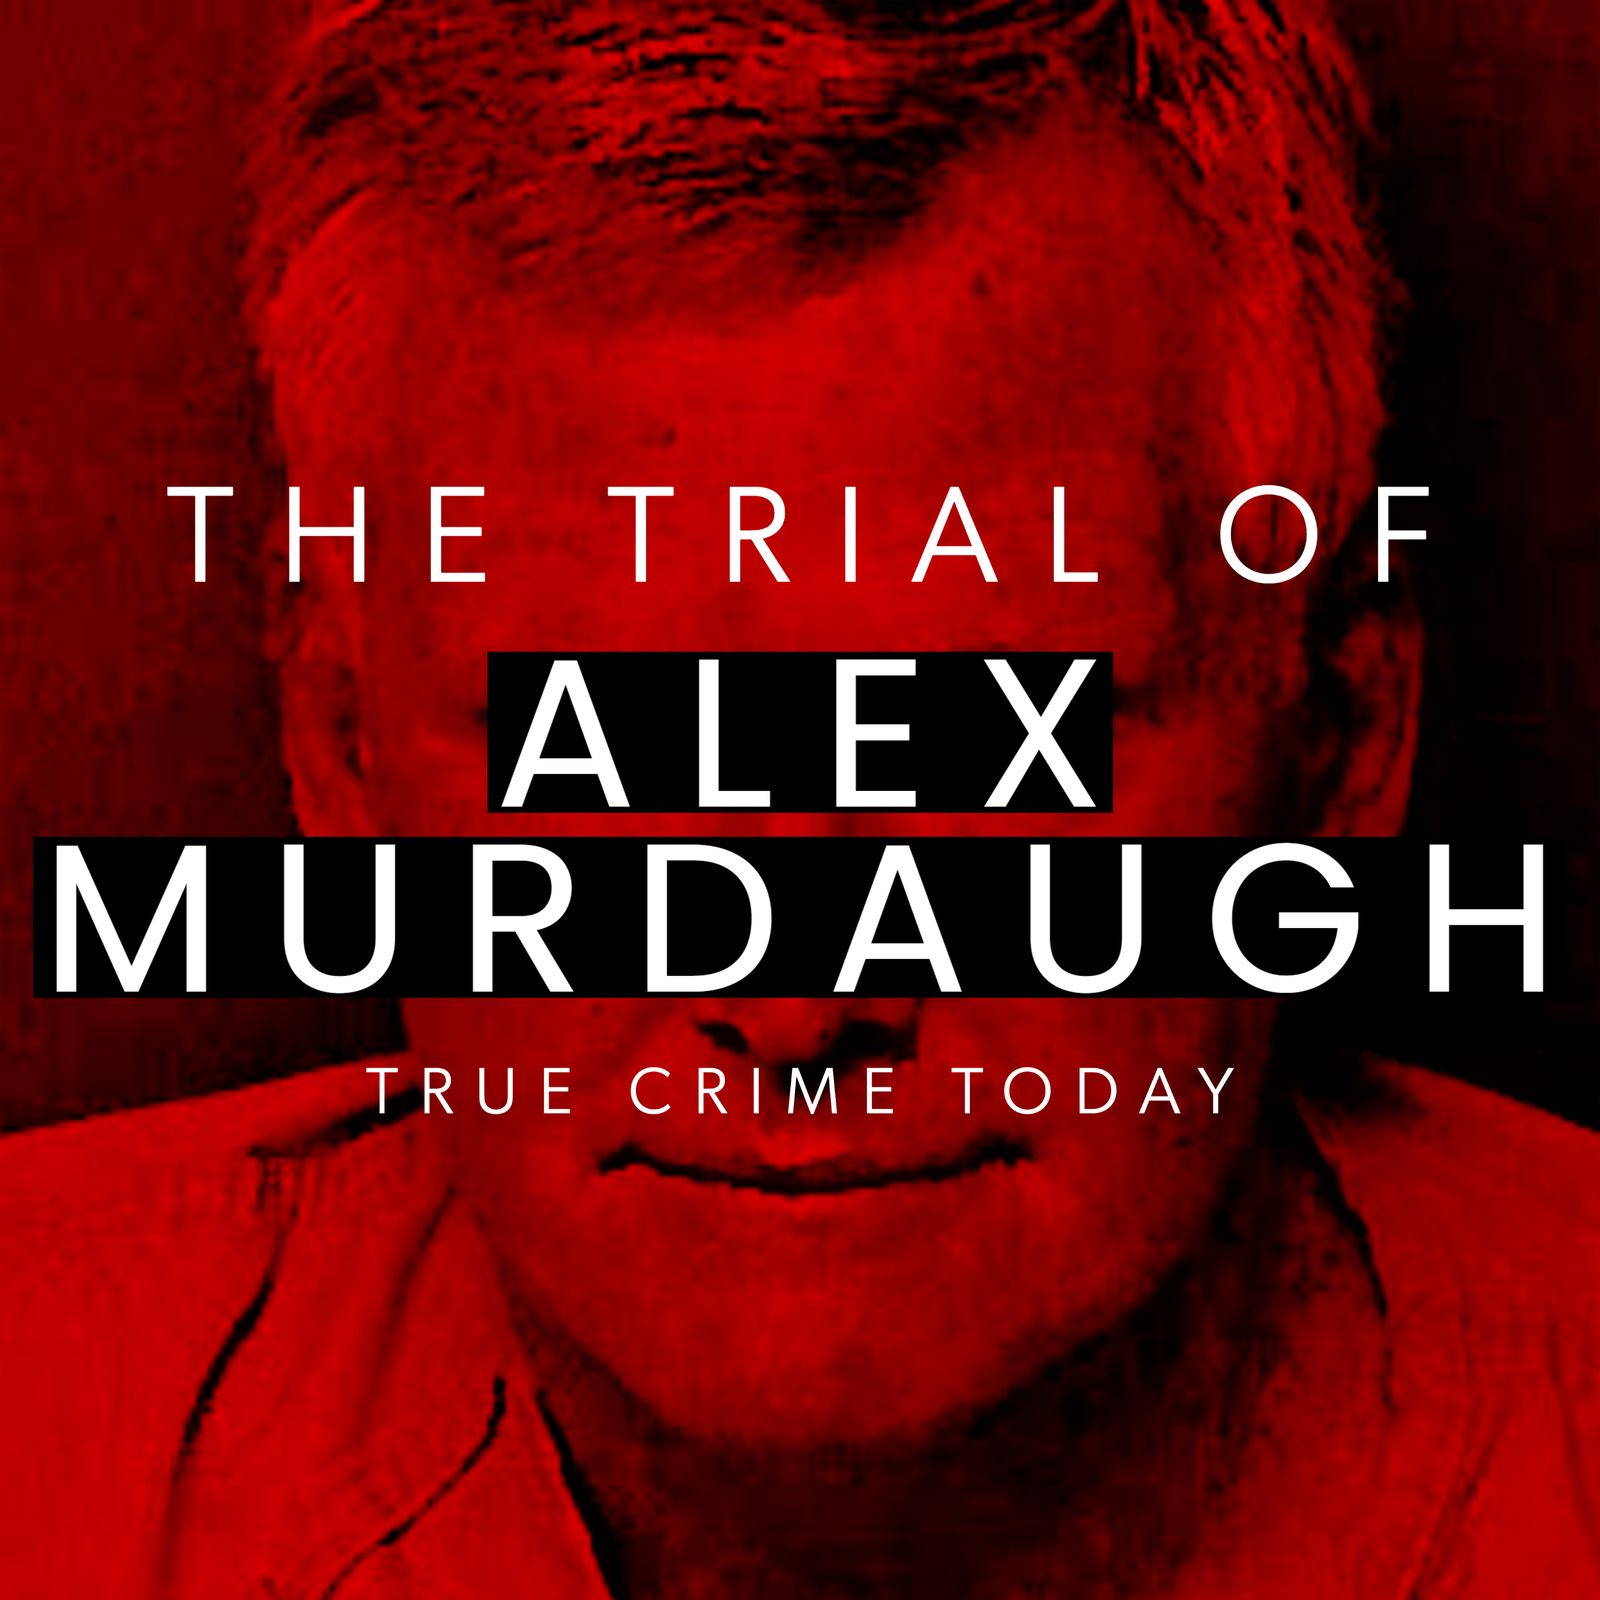 Would A Change of Venue Affect Future Alex Murdaugh Verdicts?